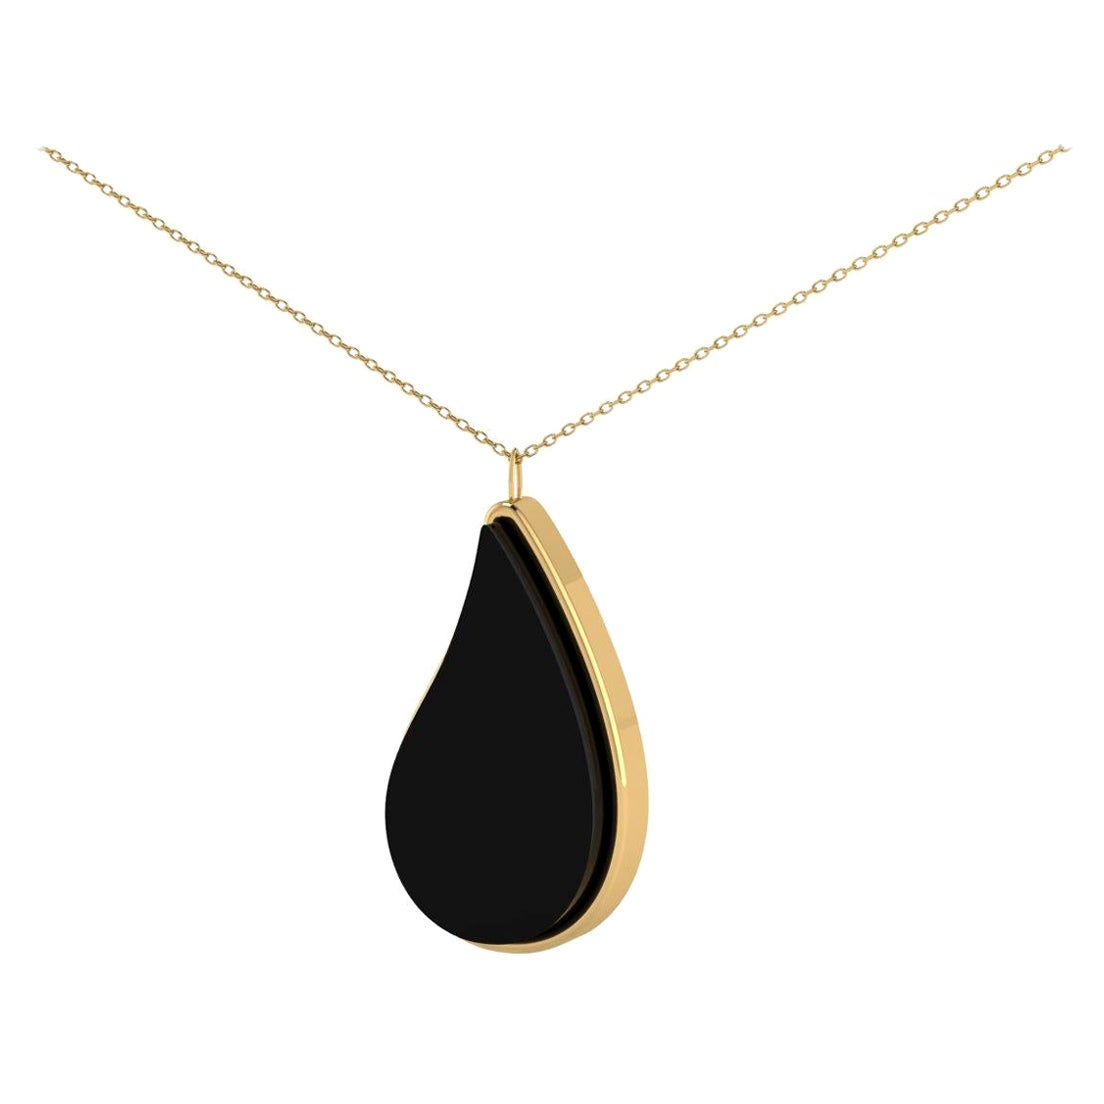 Onyx Teardrop Pendant Encased in 14k Gold on an 18k Gold Chain For Sale